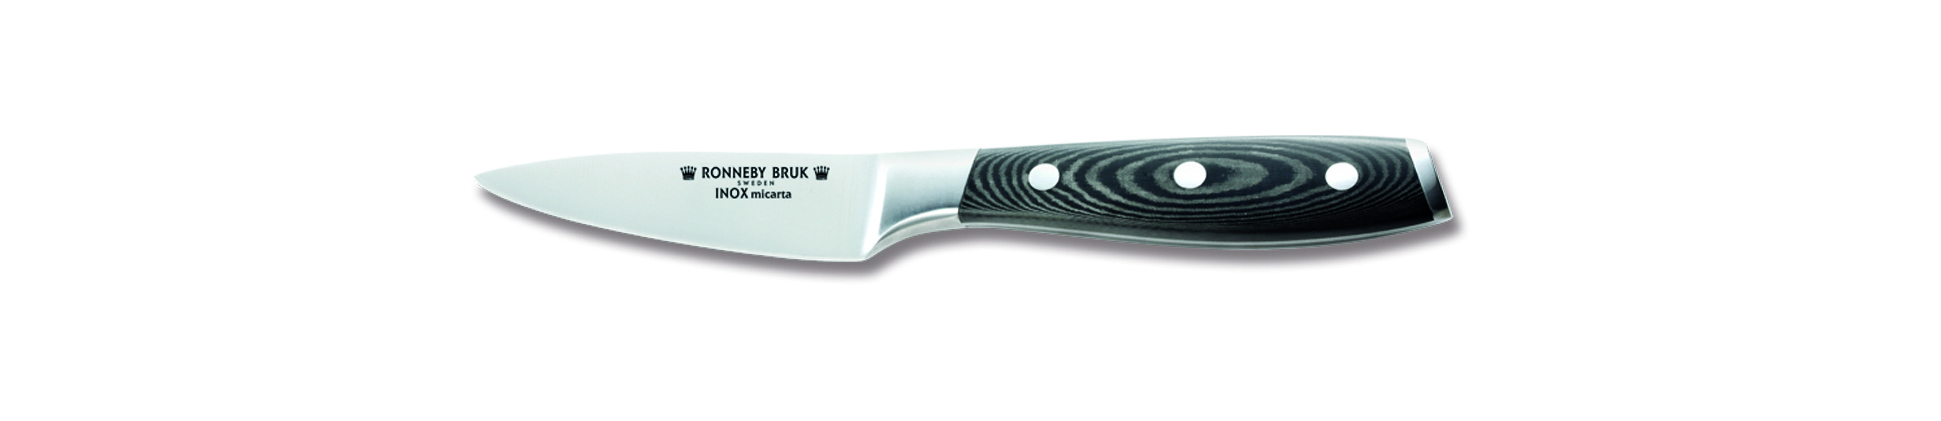 90700 Paring knife